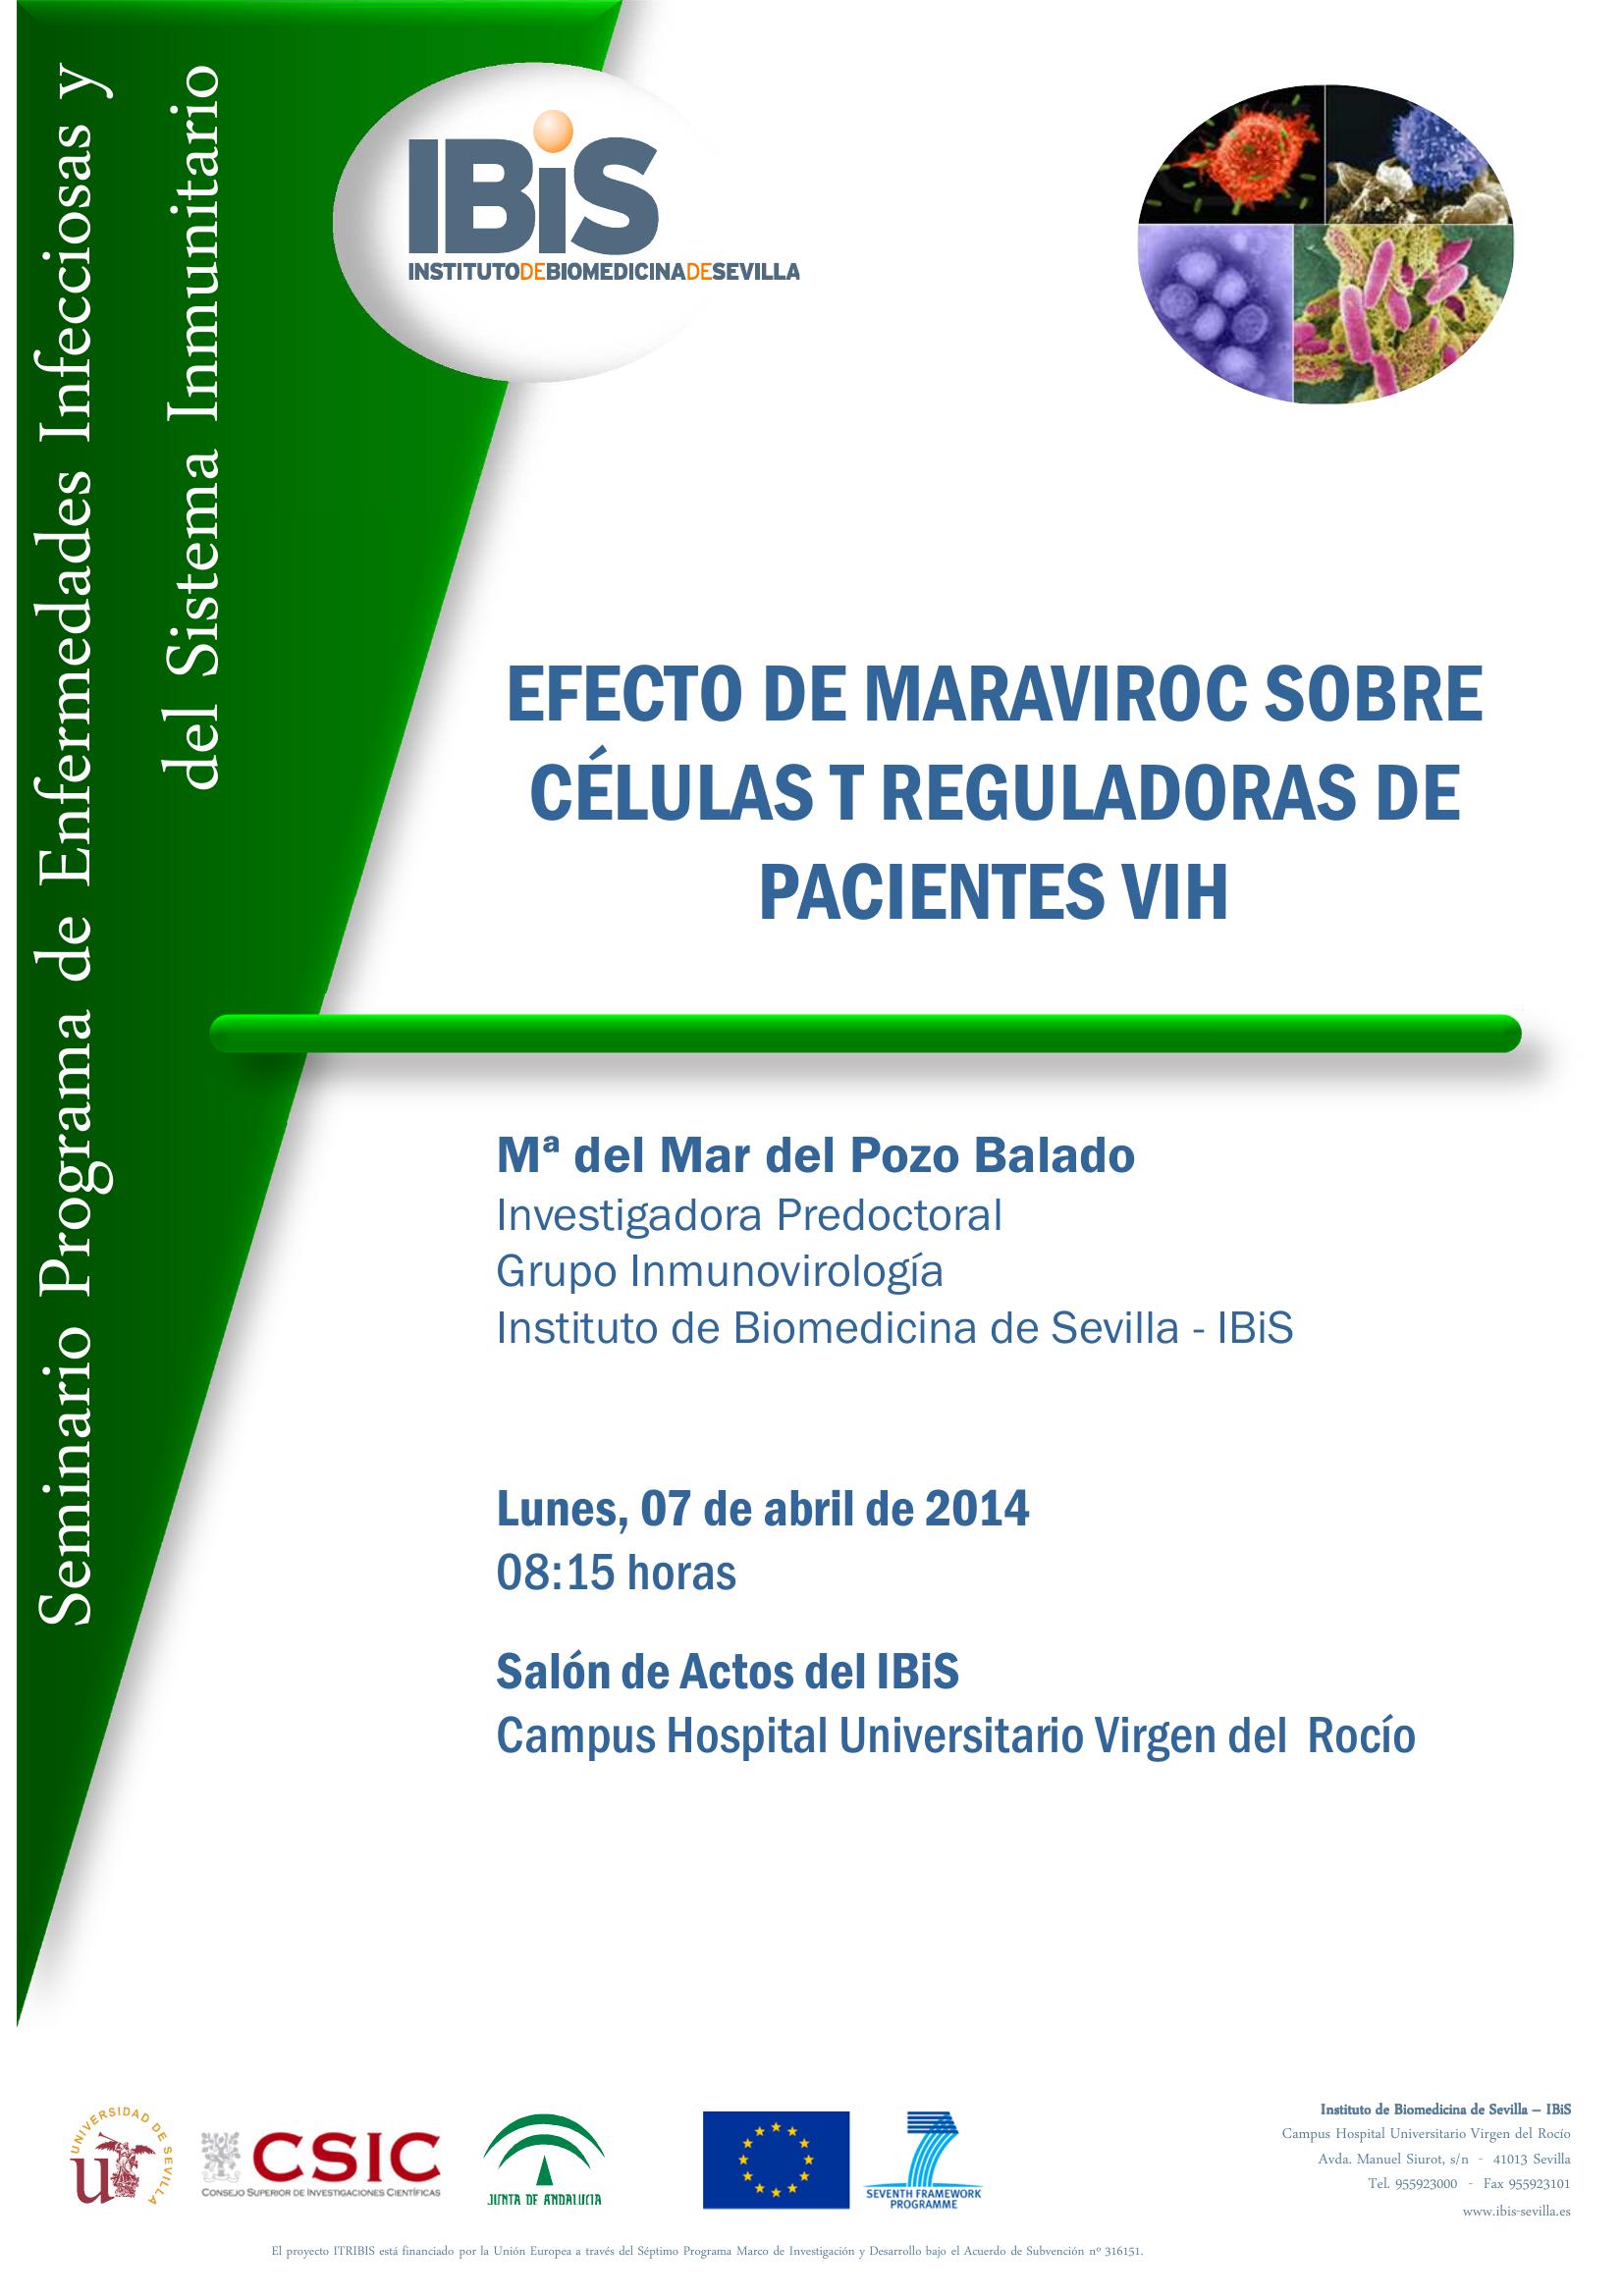 Poster: EFECTO DE MARAVIROC SOBRE CÉLULAS T REGULADORAS DE PACIENTES VIH